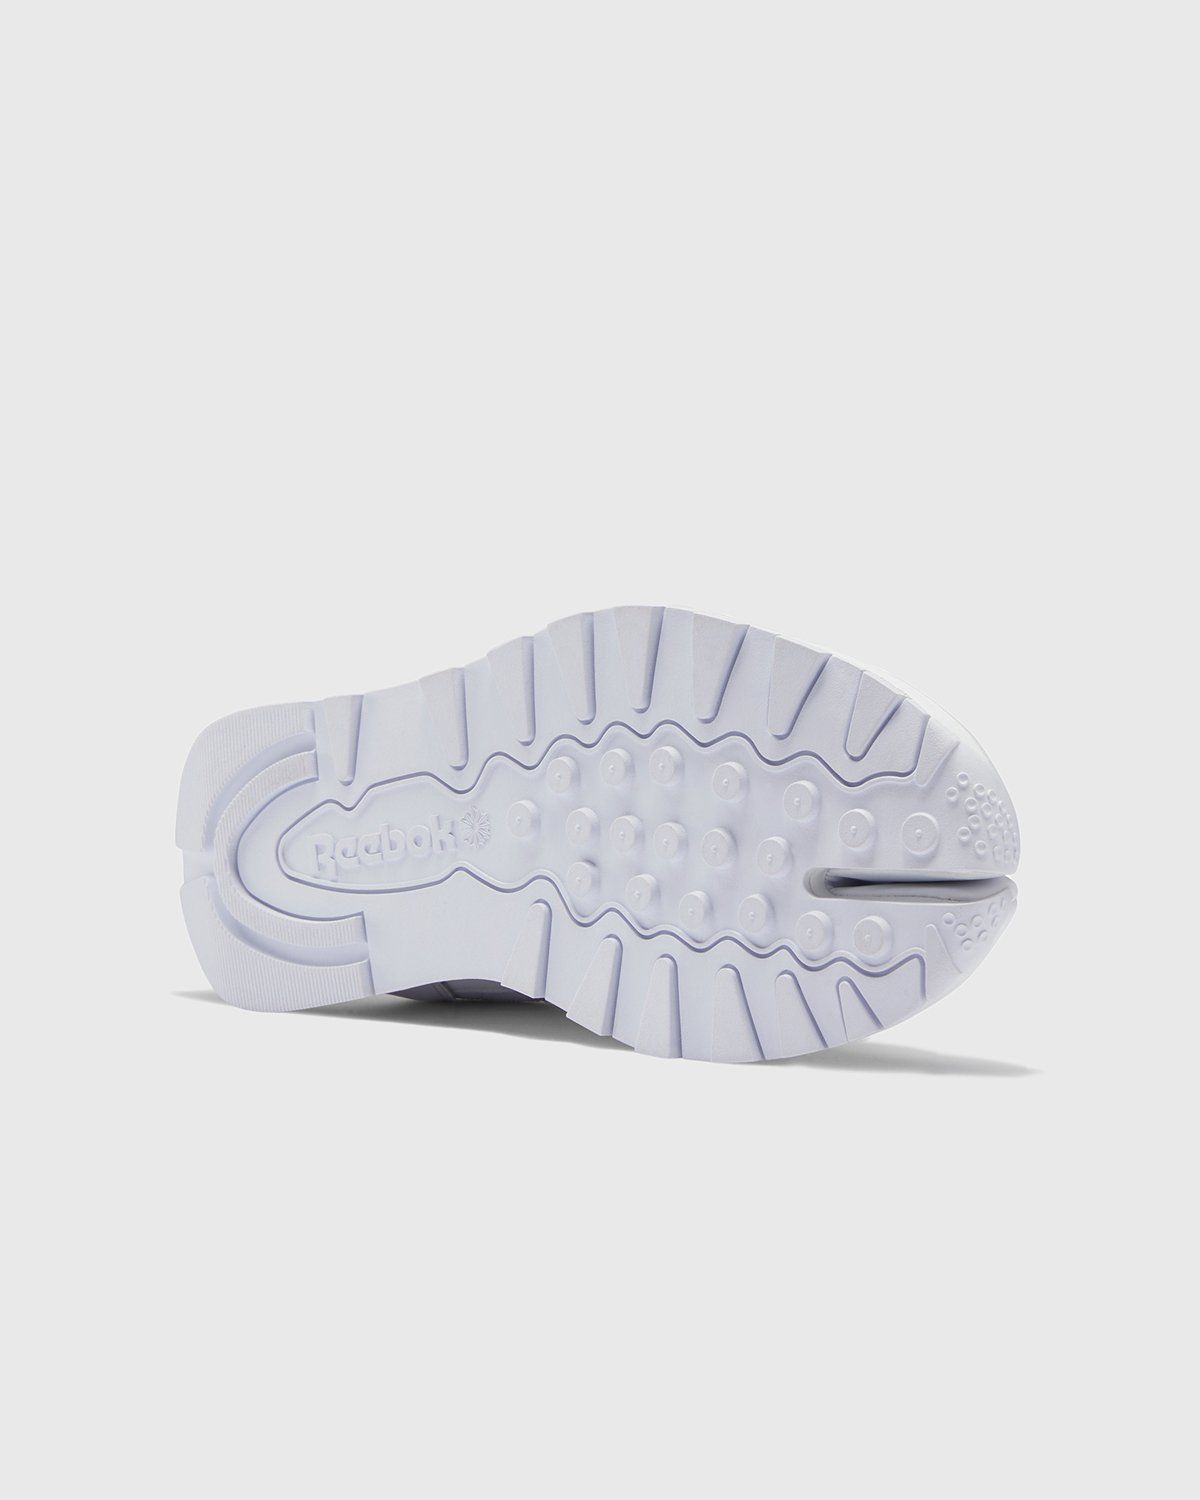 Maison Margiela x Reebok – Classic Leather Tabi White - Sneakers - White - Image 8